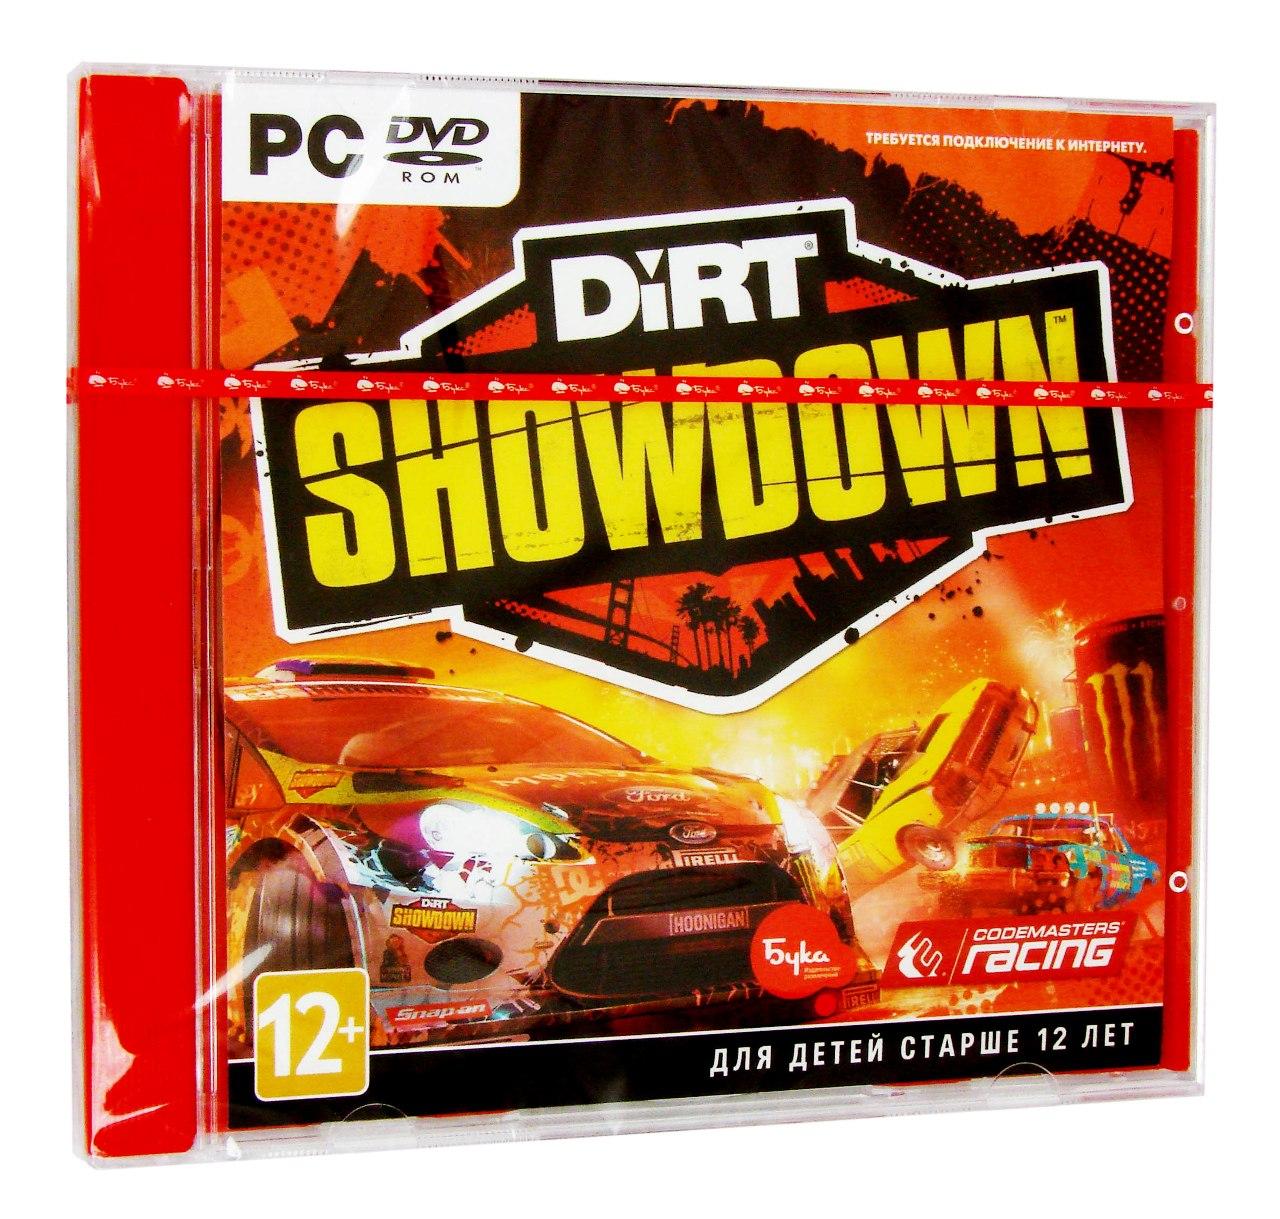 Компьютерный компакт-диск DIRT Showdown (PC), фирма "Бука", 1DVD